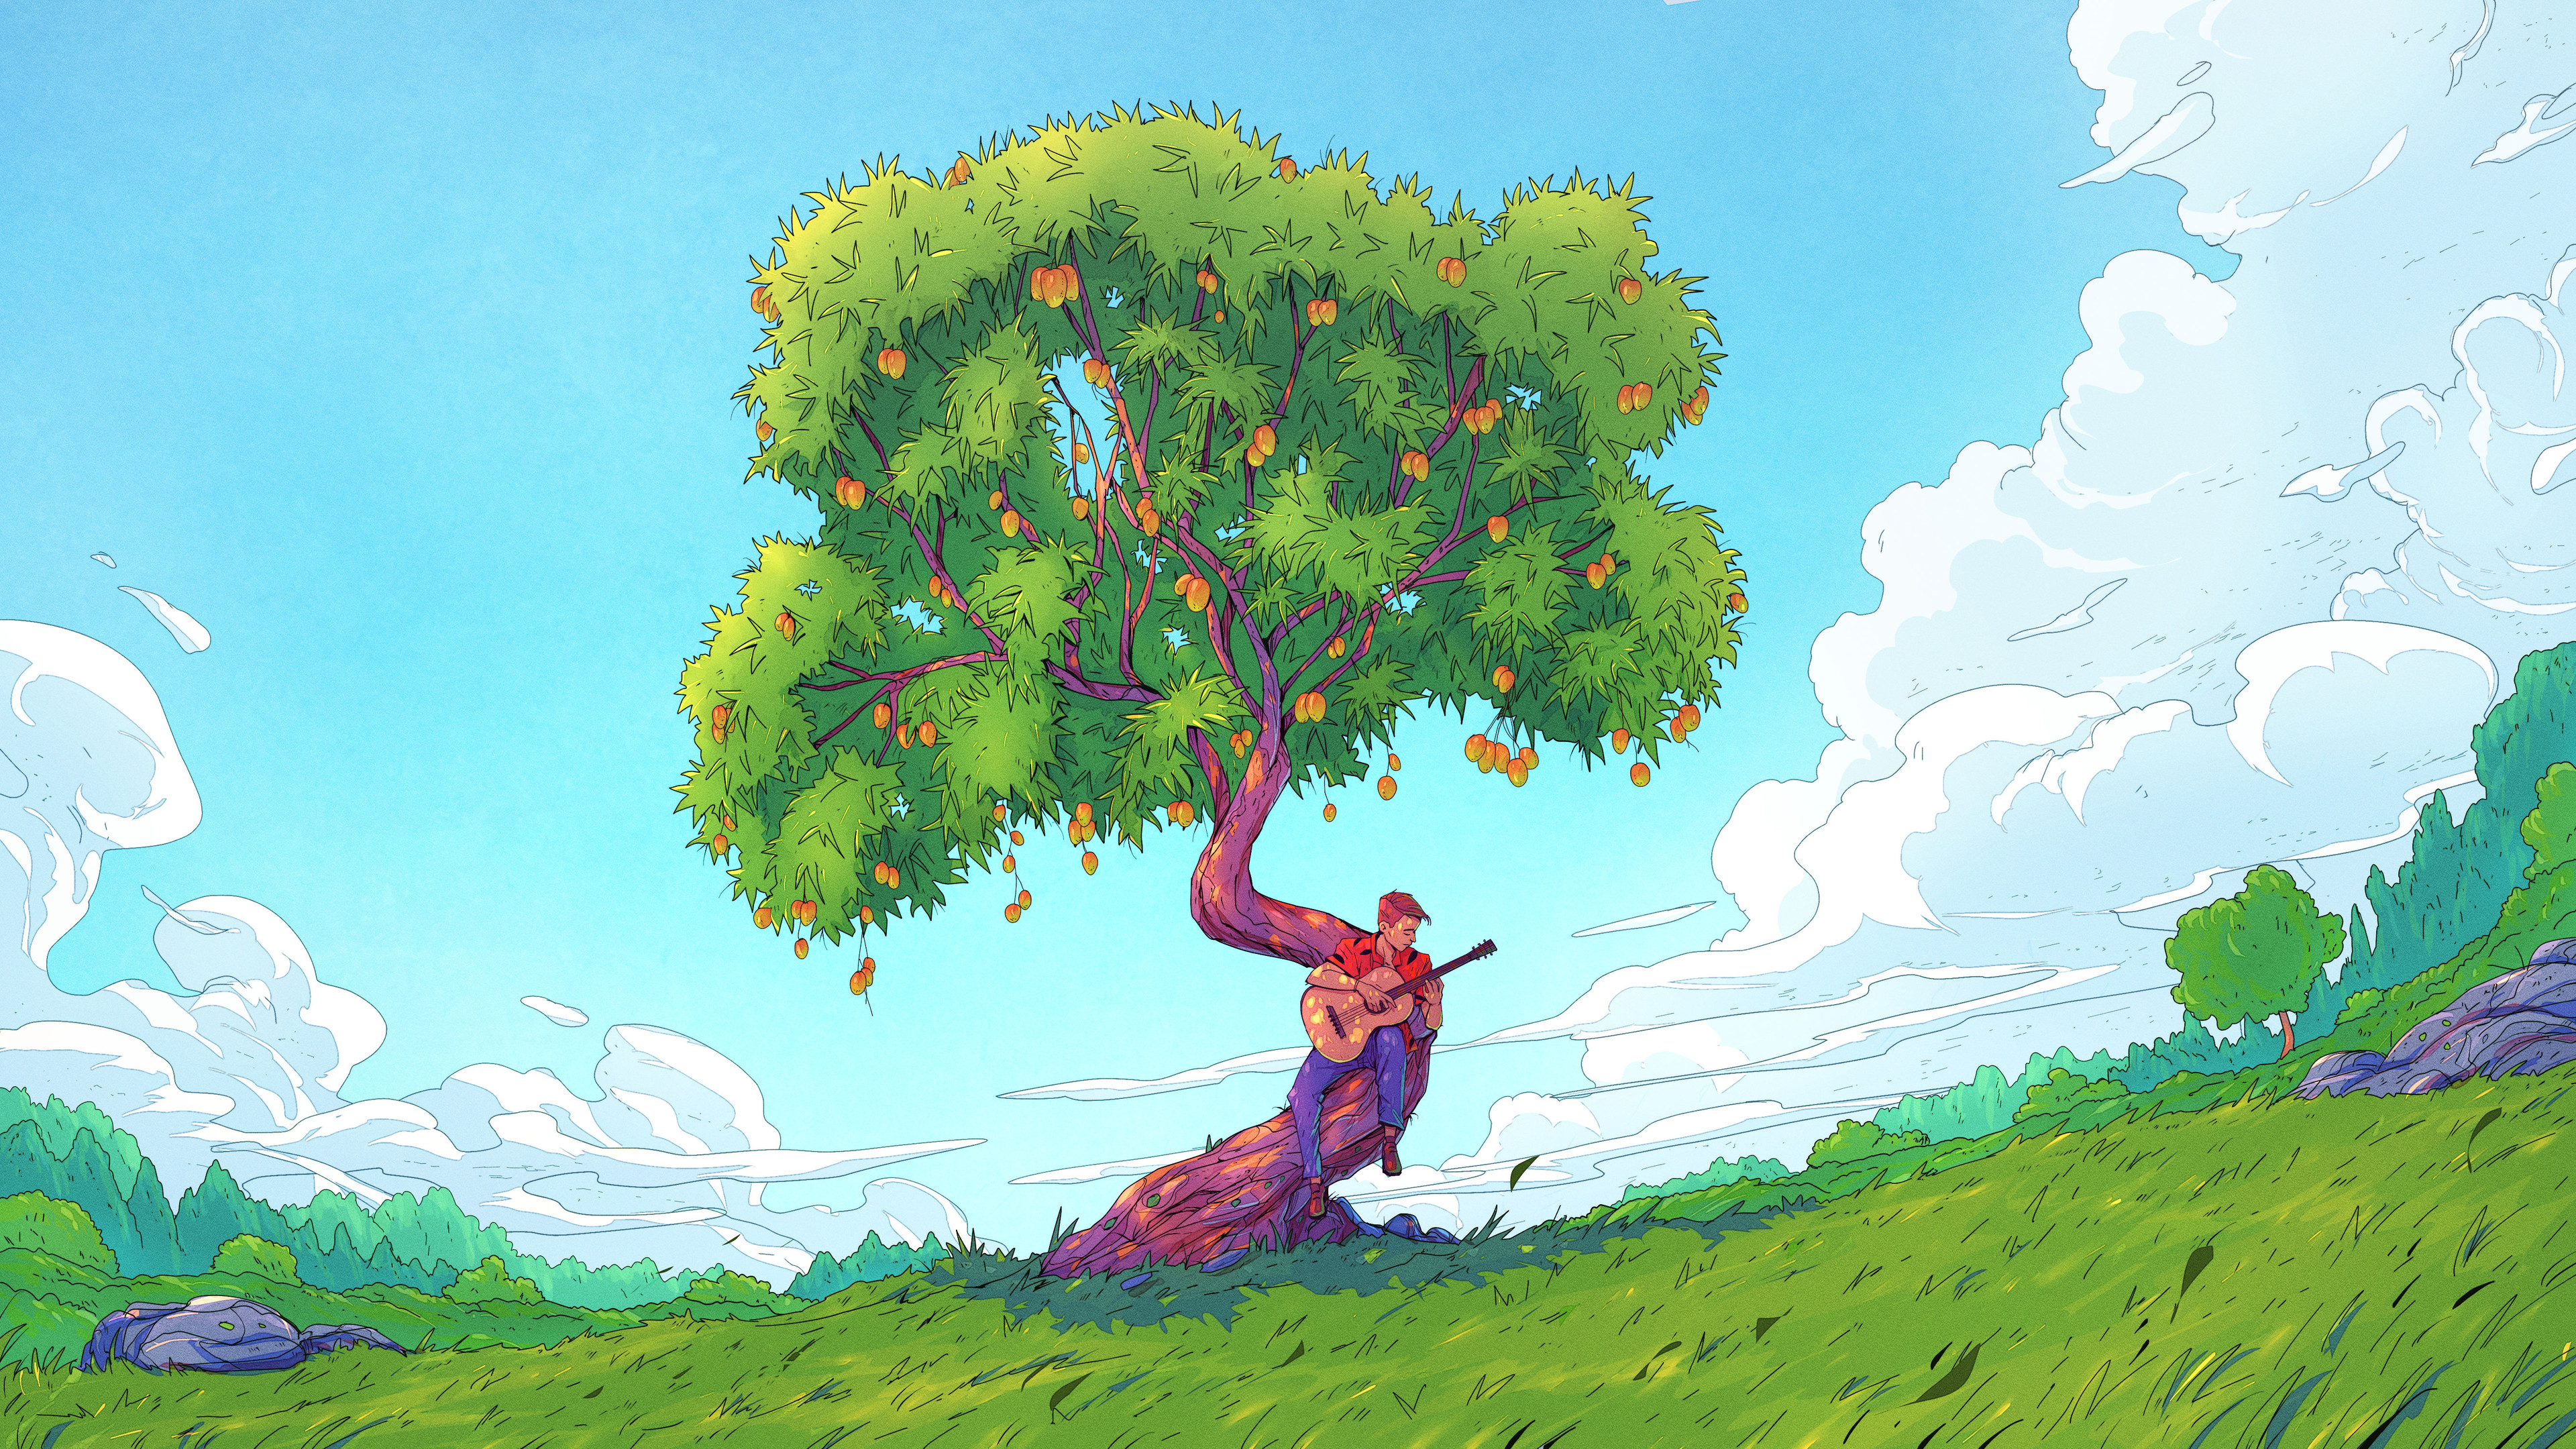 Christian Benavides Digital Art Fantasy Art Guitar Clouds Trees Pear Tree 3840x2160